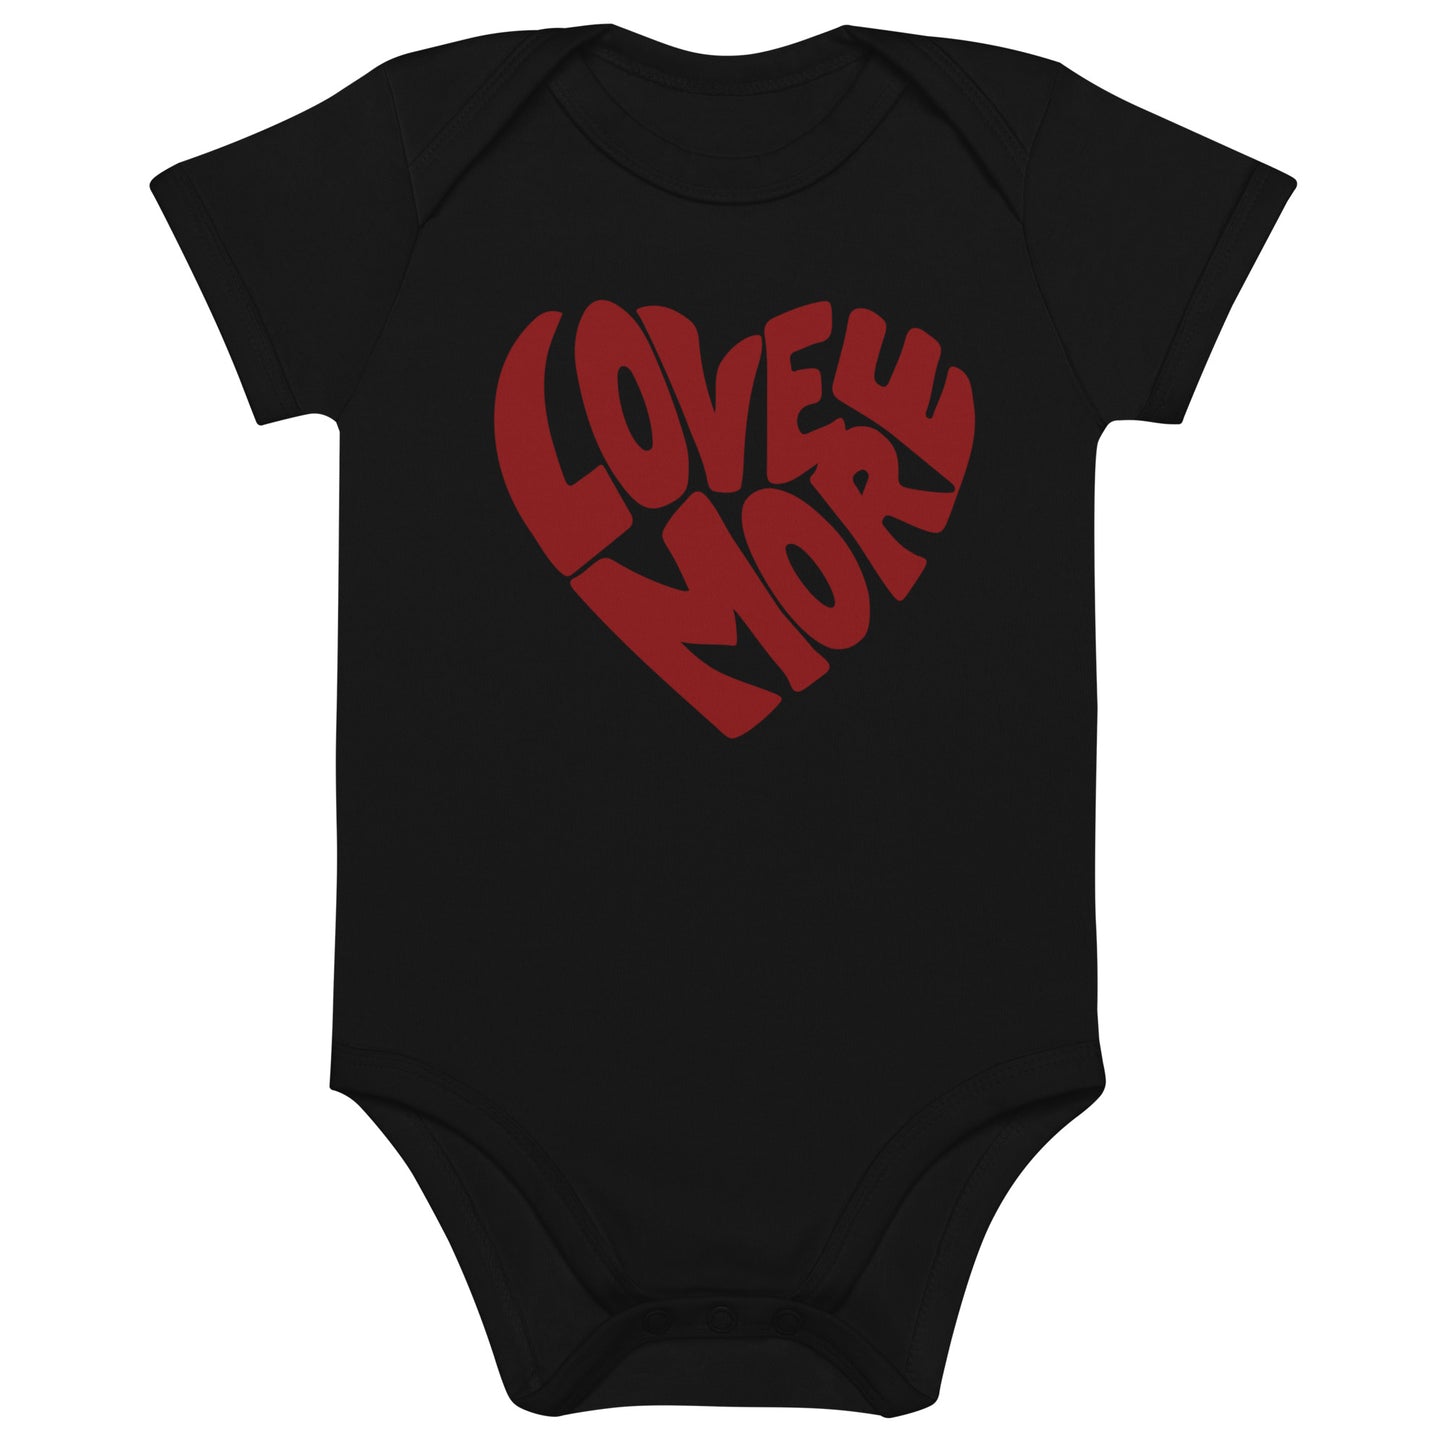 LOVE MORE Organic cotton baby bodysuit